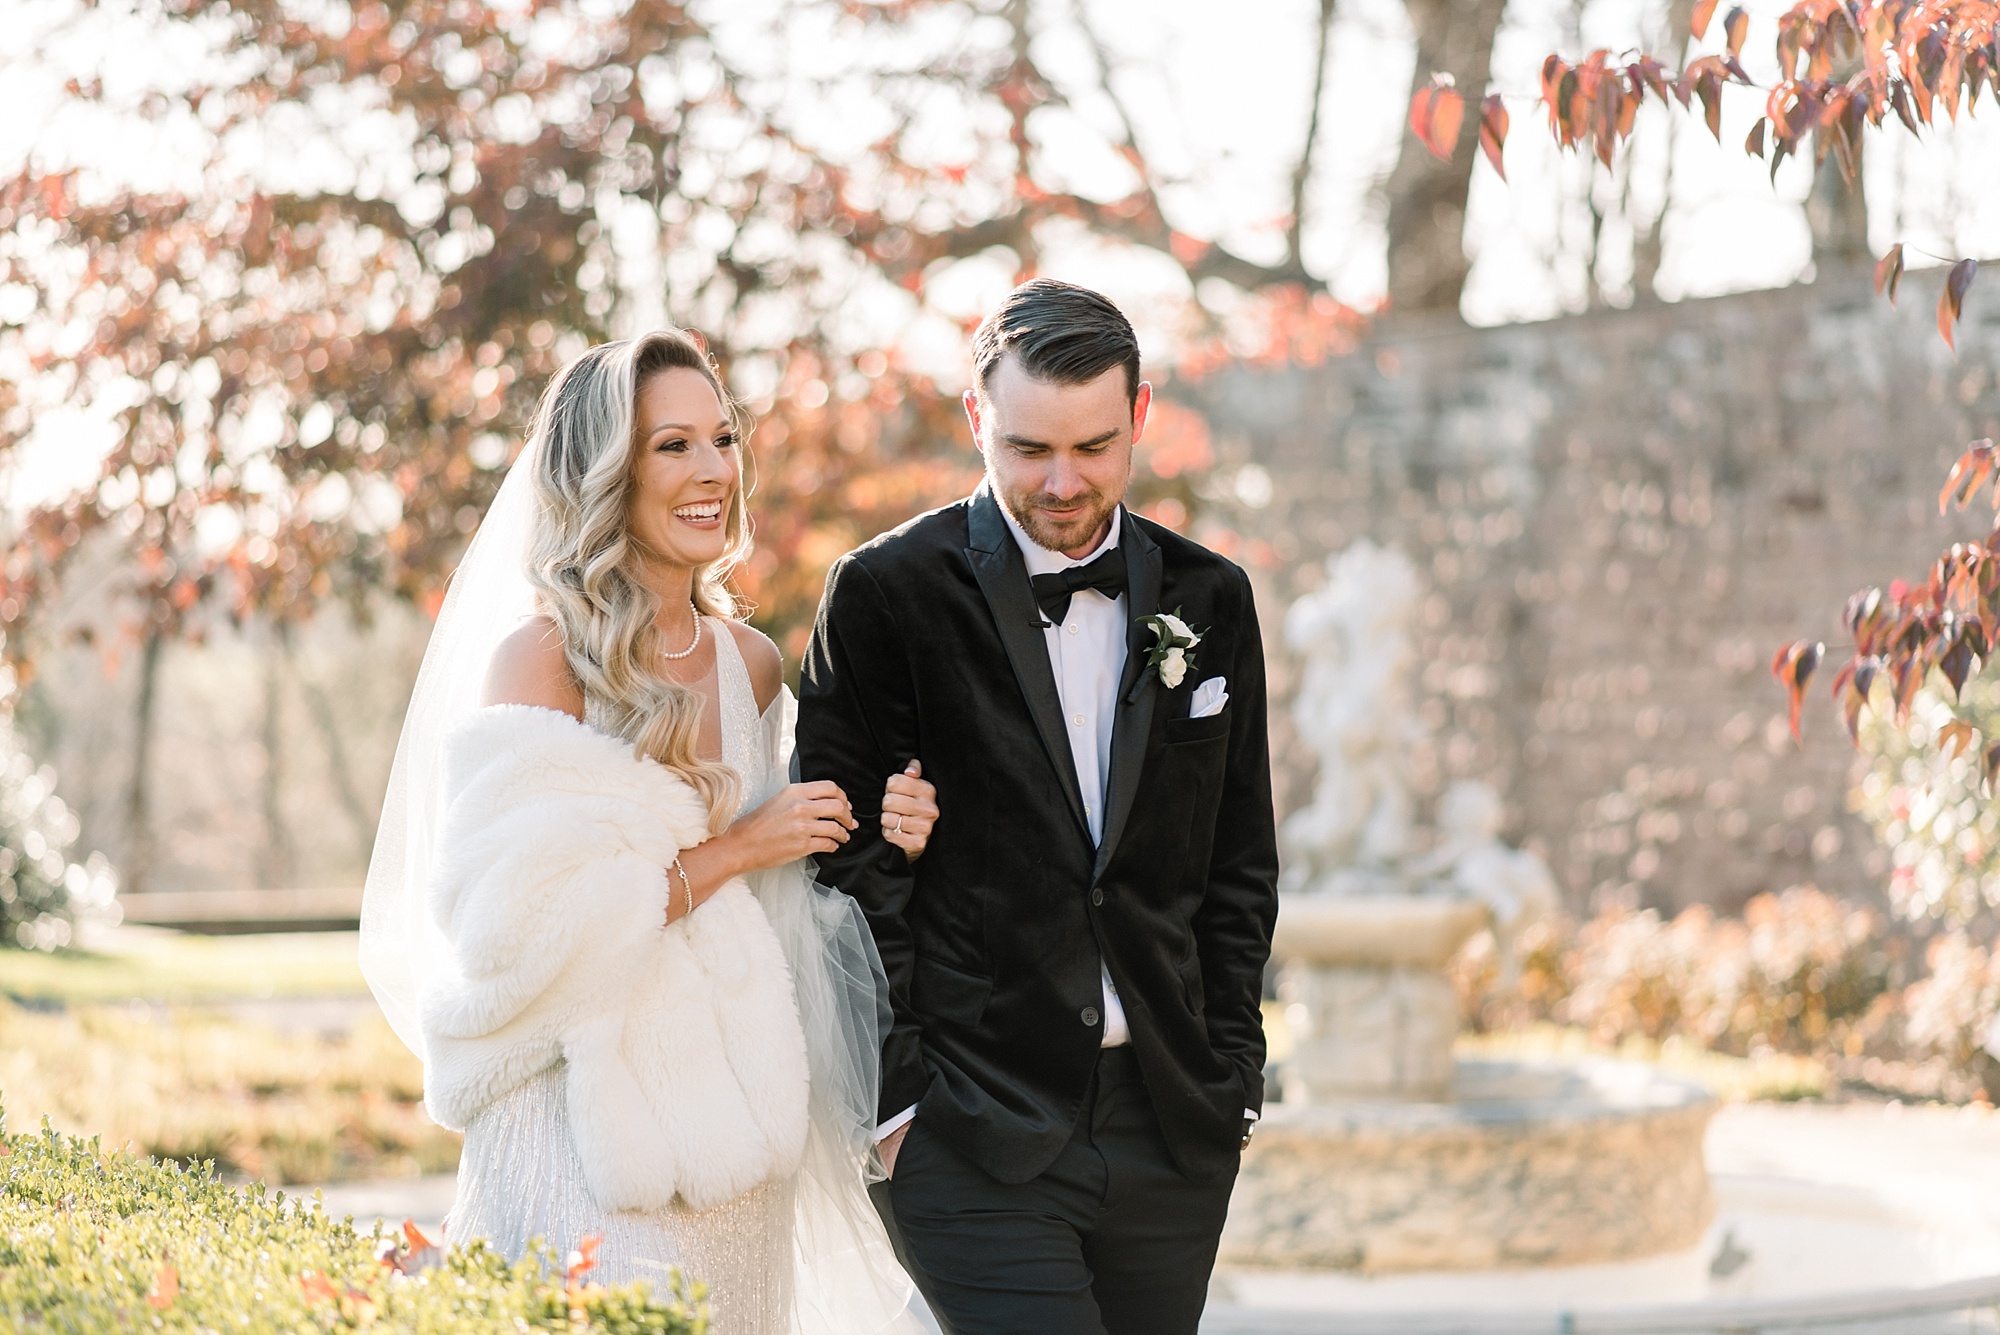 bride in fringe dress with fur wrap walks holding groom's arm 